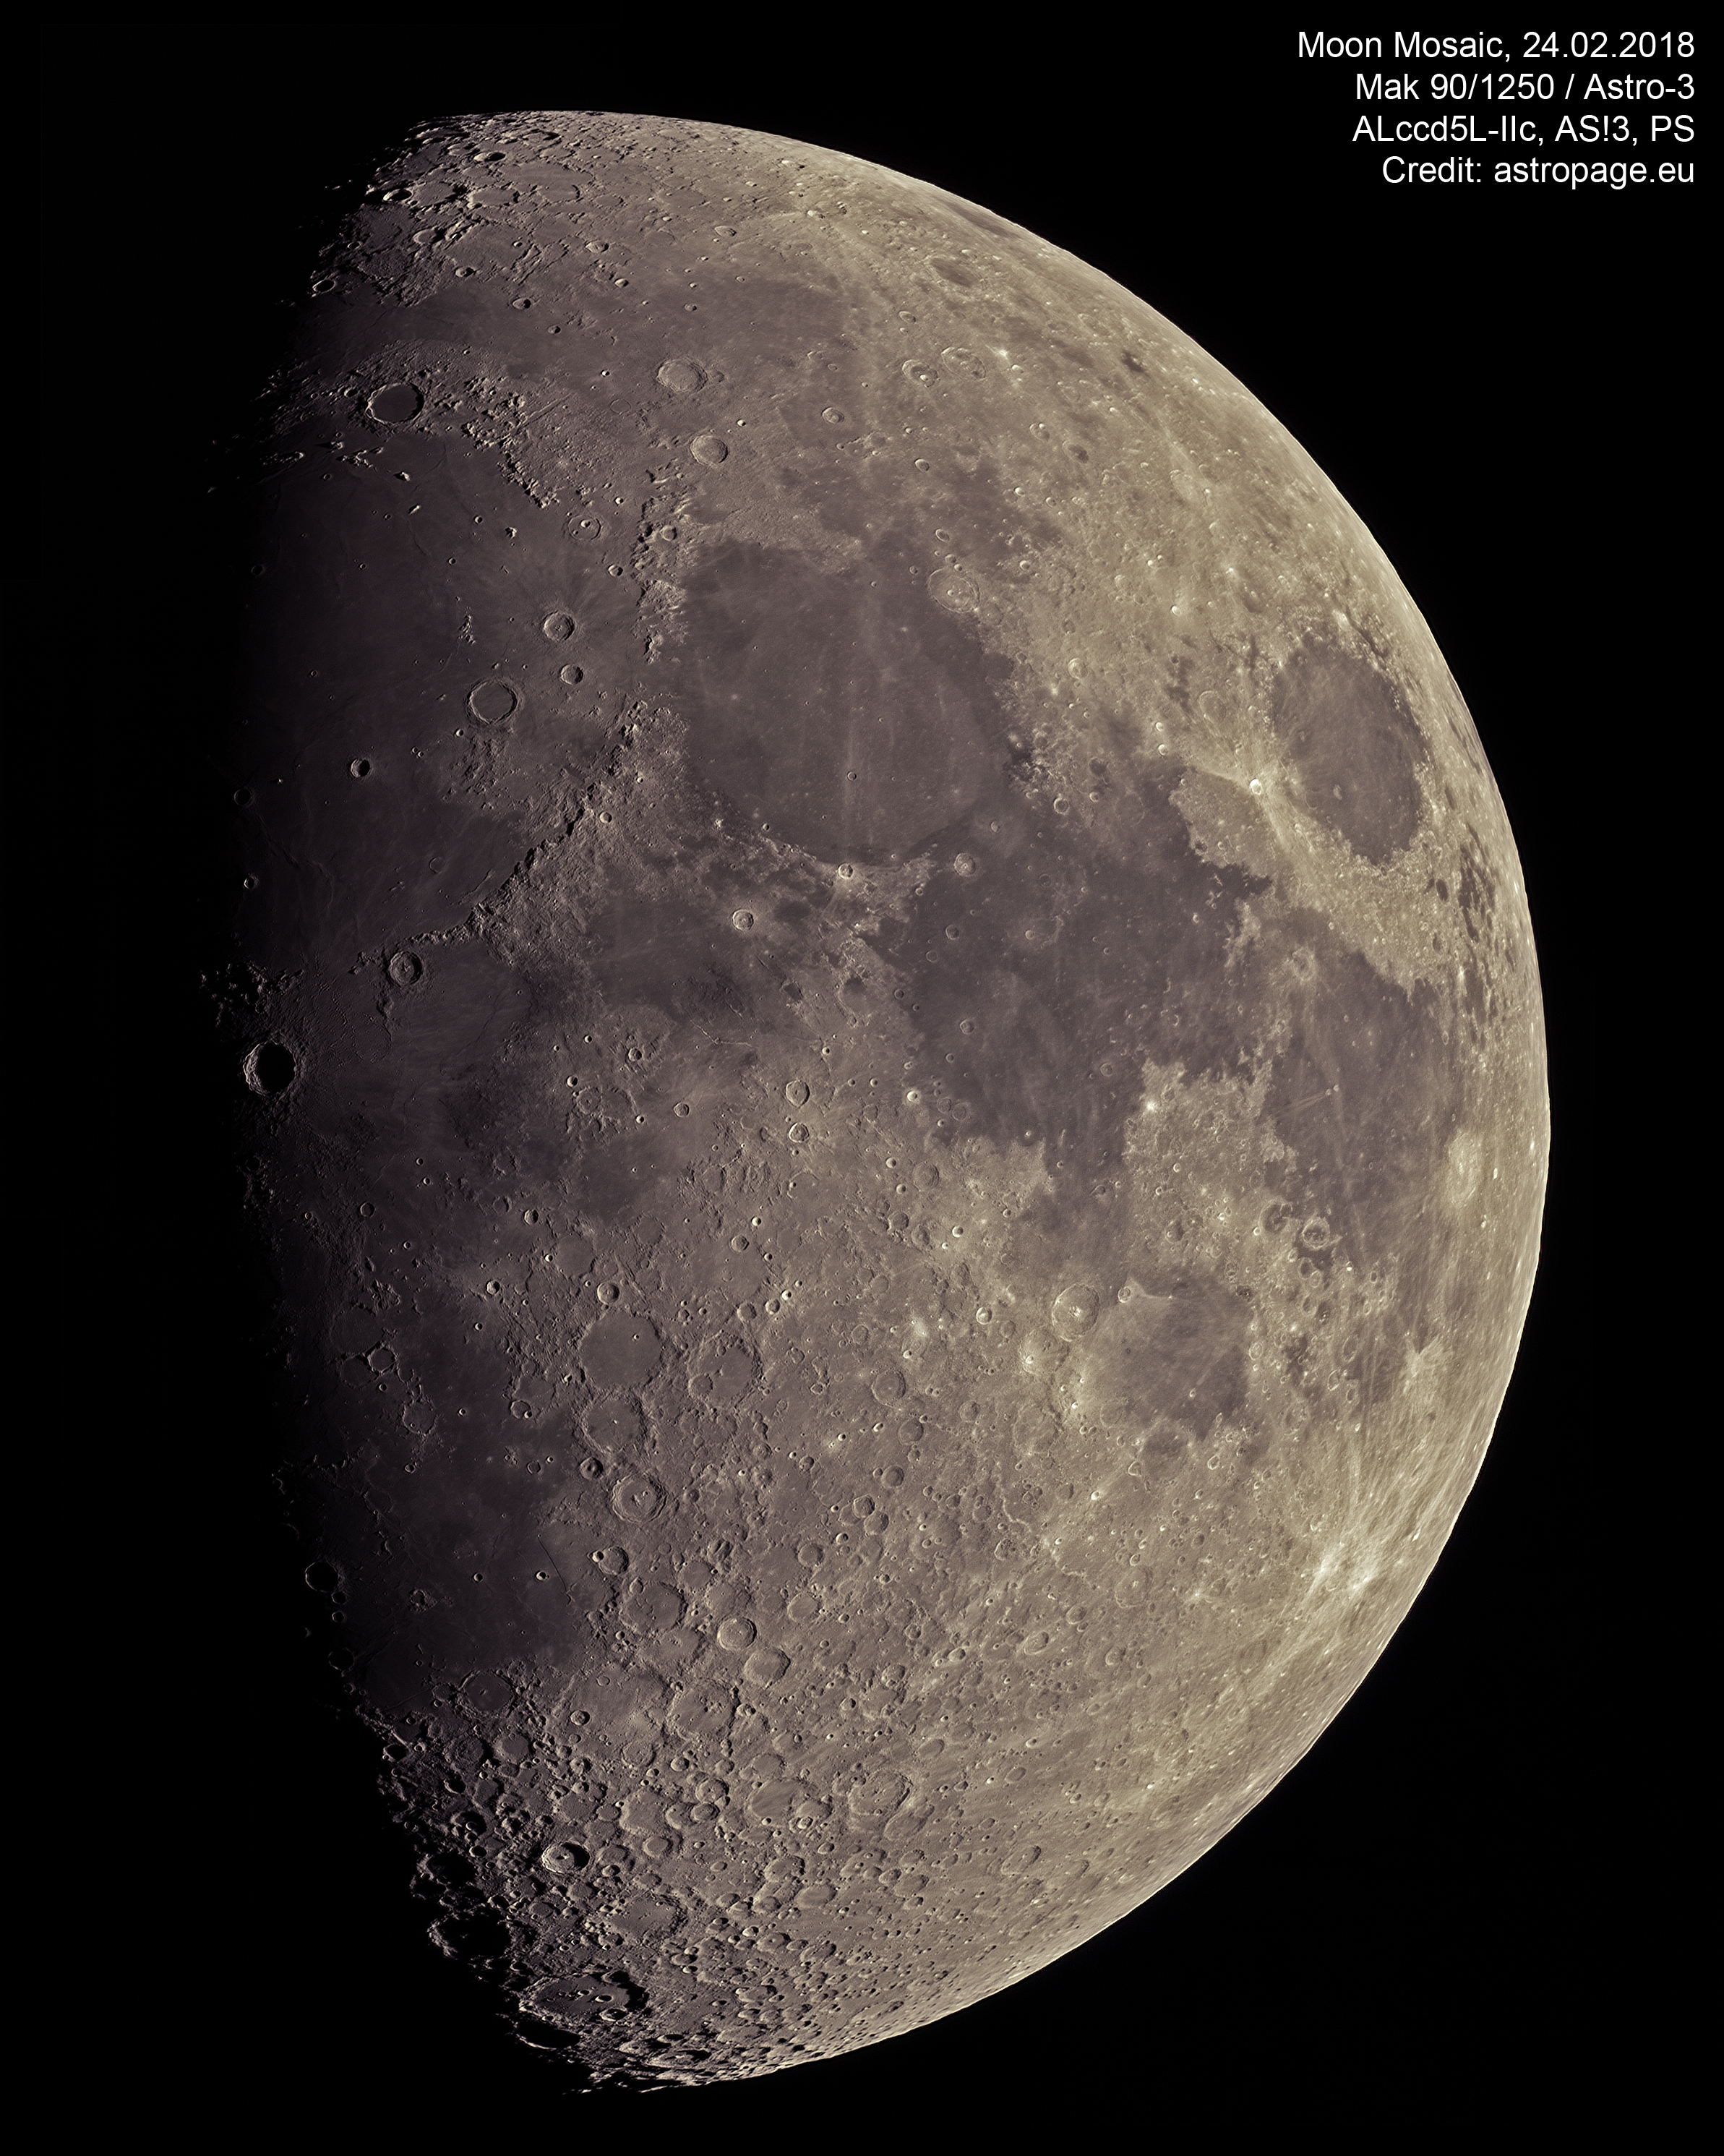 Mond-Mosaik vom 24. Februar 2018. (Credit: astropage.eu)